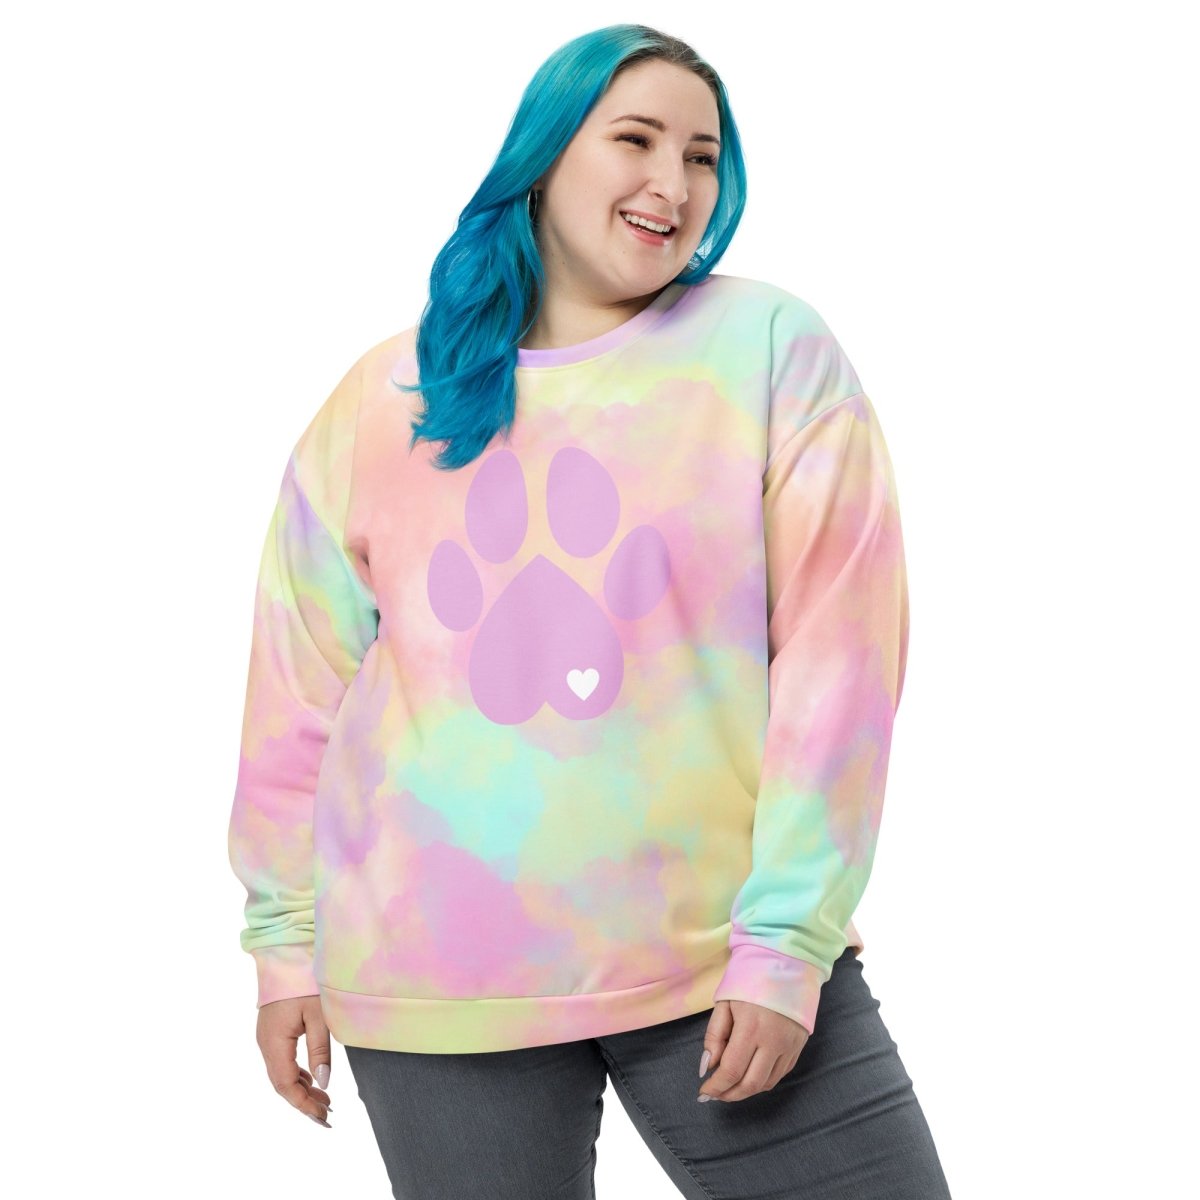 Pastel Cloud Dog Paw Sweatshirt - DoggyLoveandMore